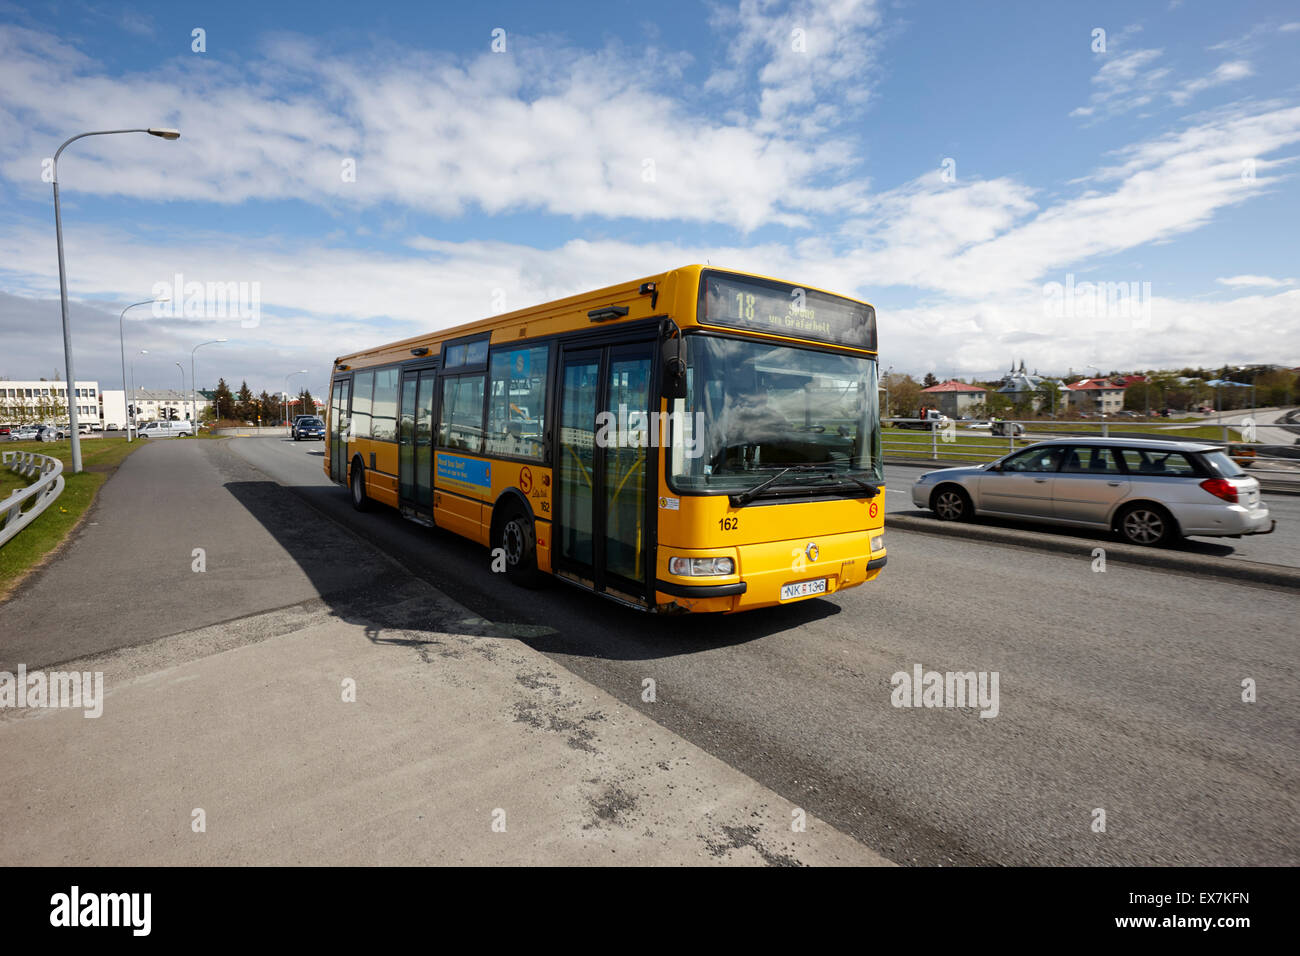 Reykjavik yellow local bus transport iceland Stock Photo